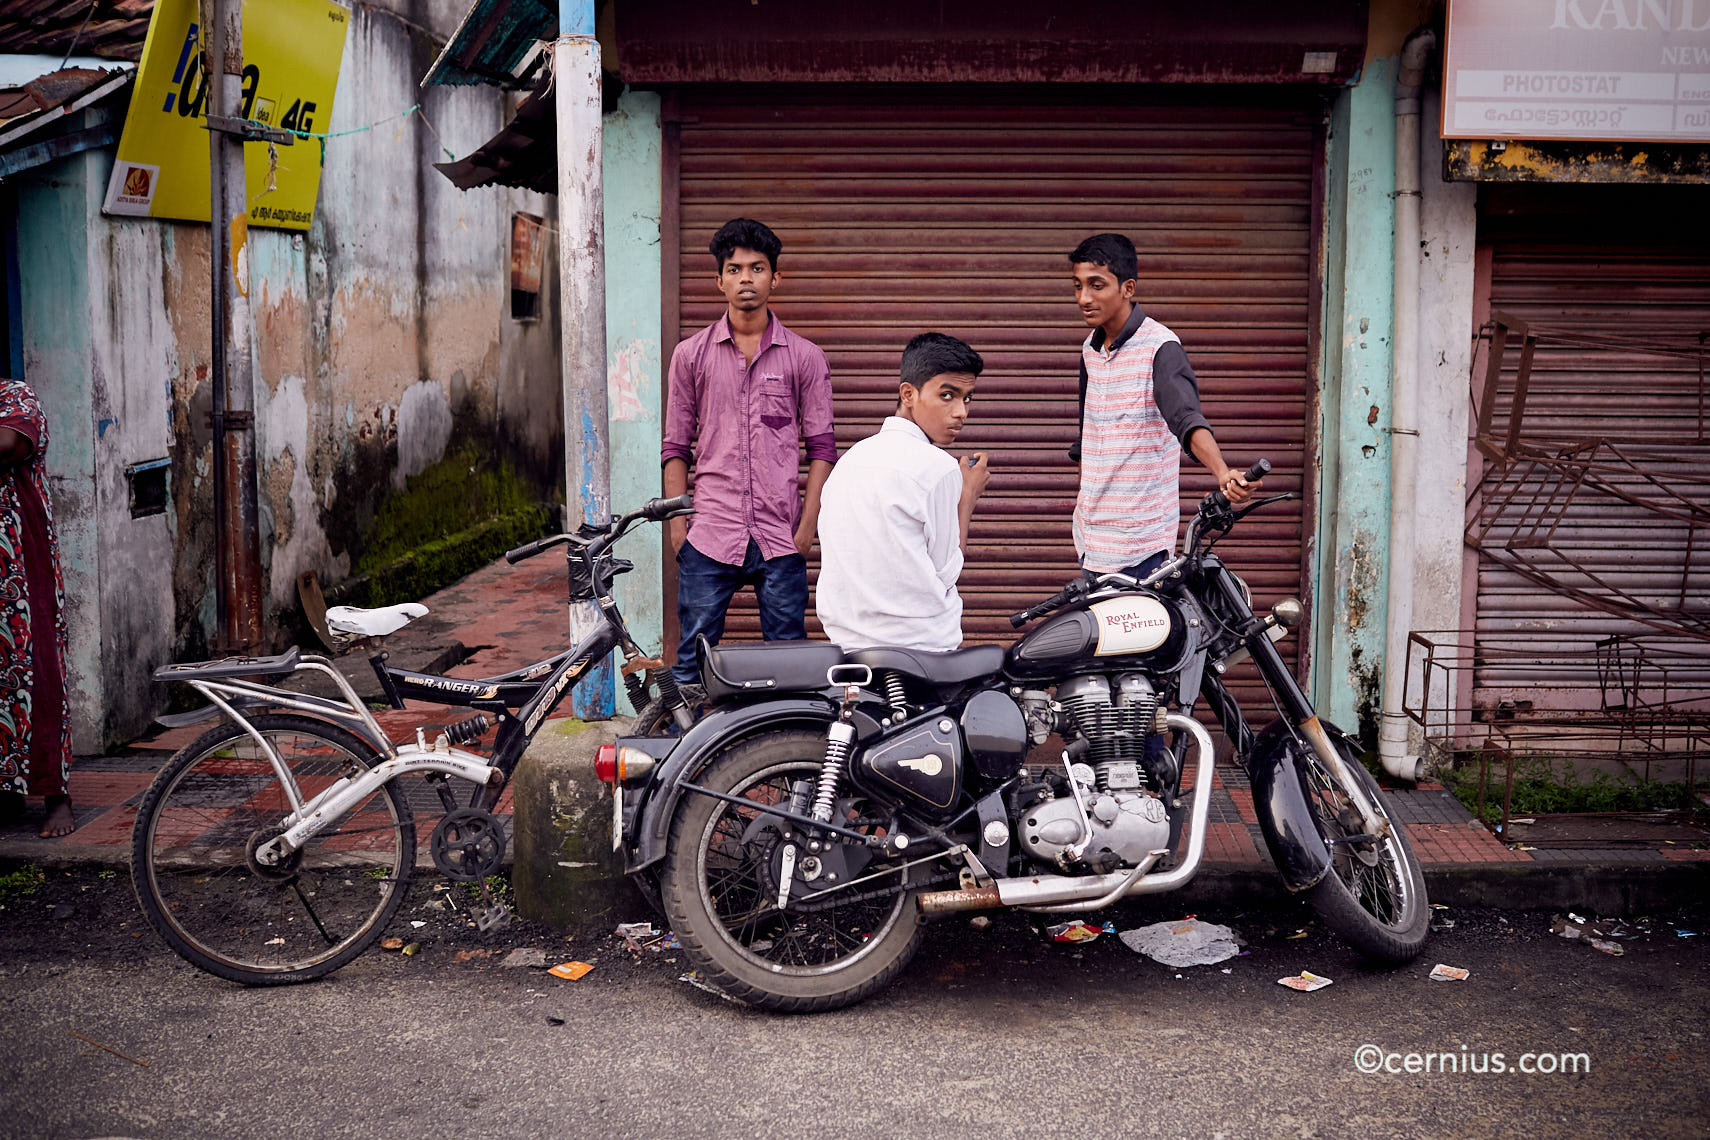 A street scene in Kerala, India | Juozas Cernius